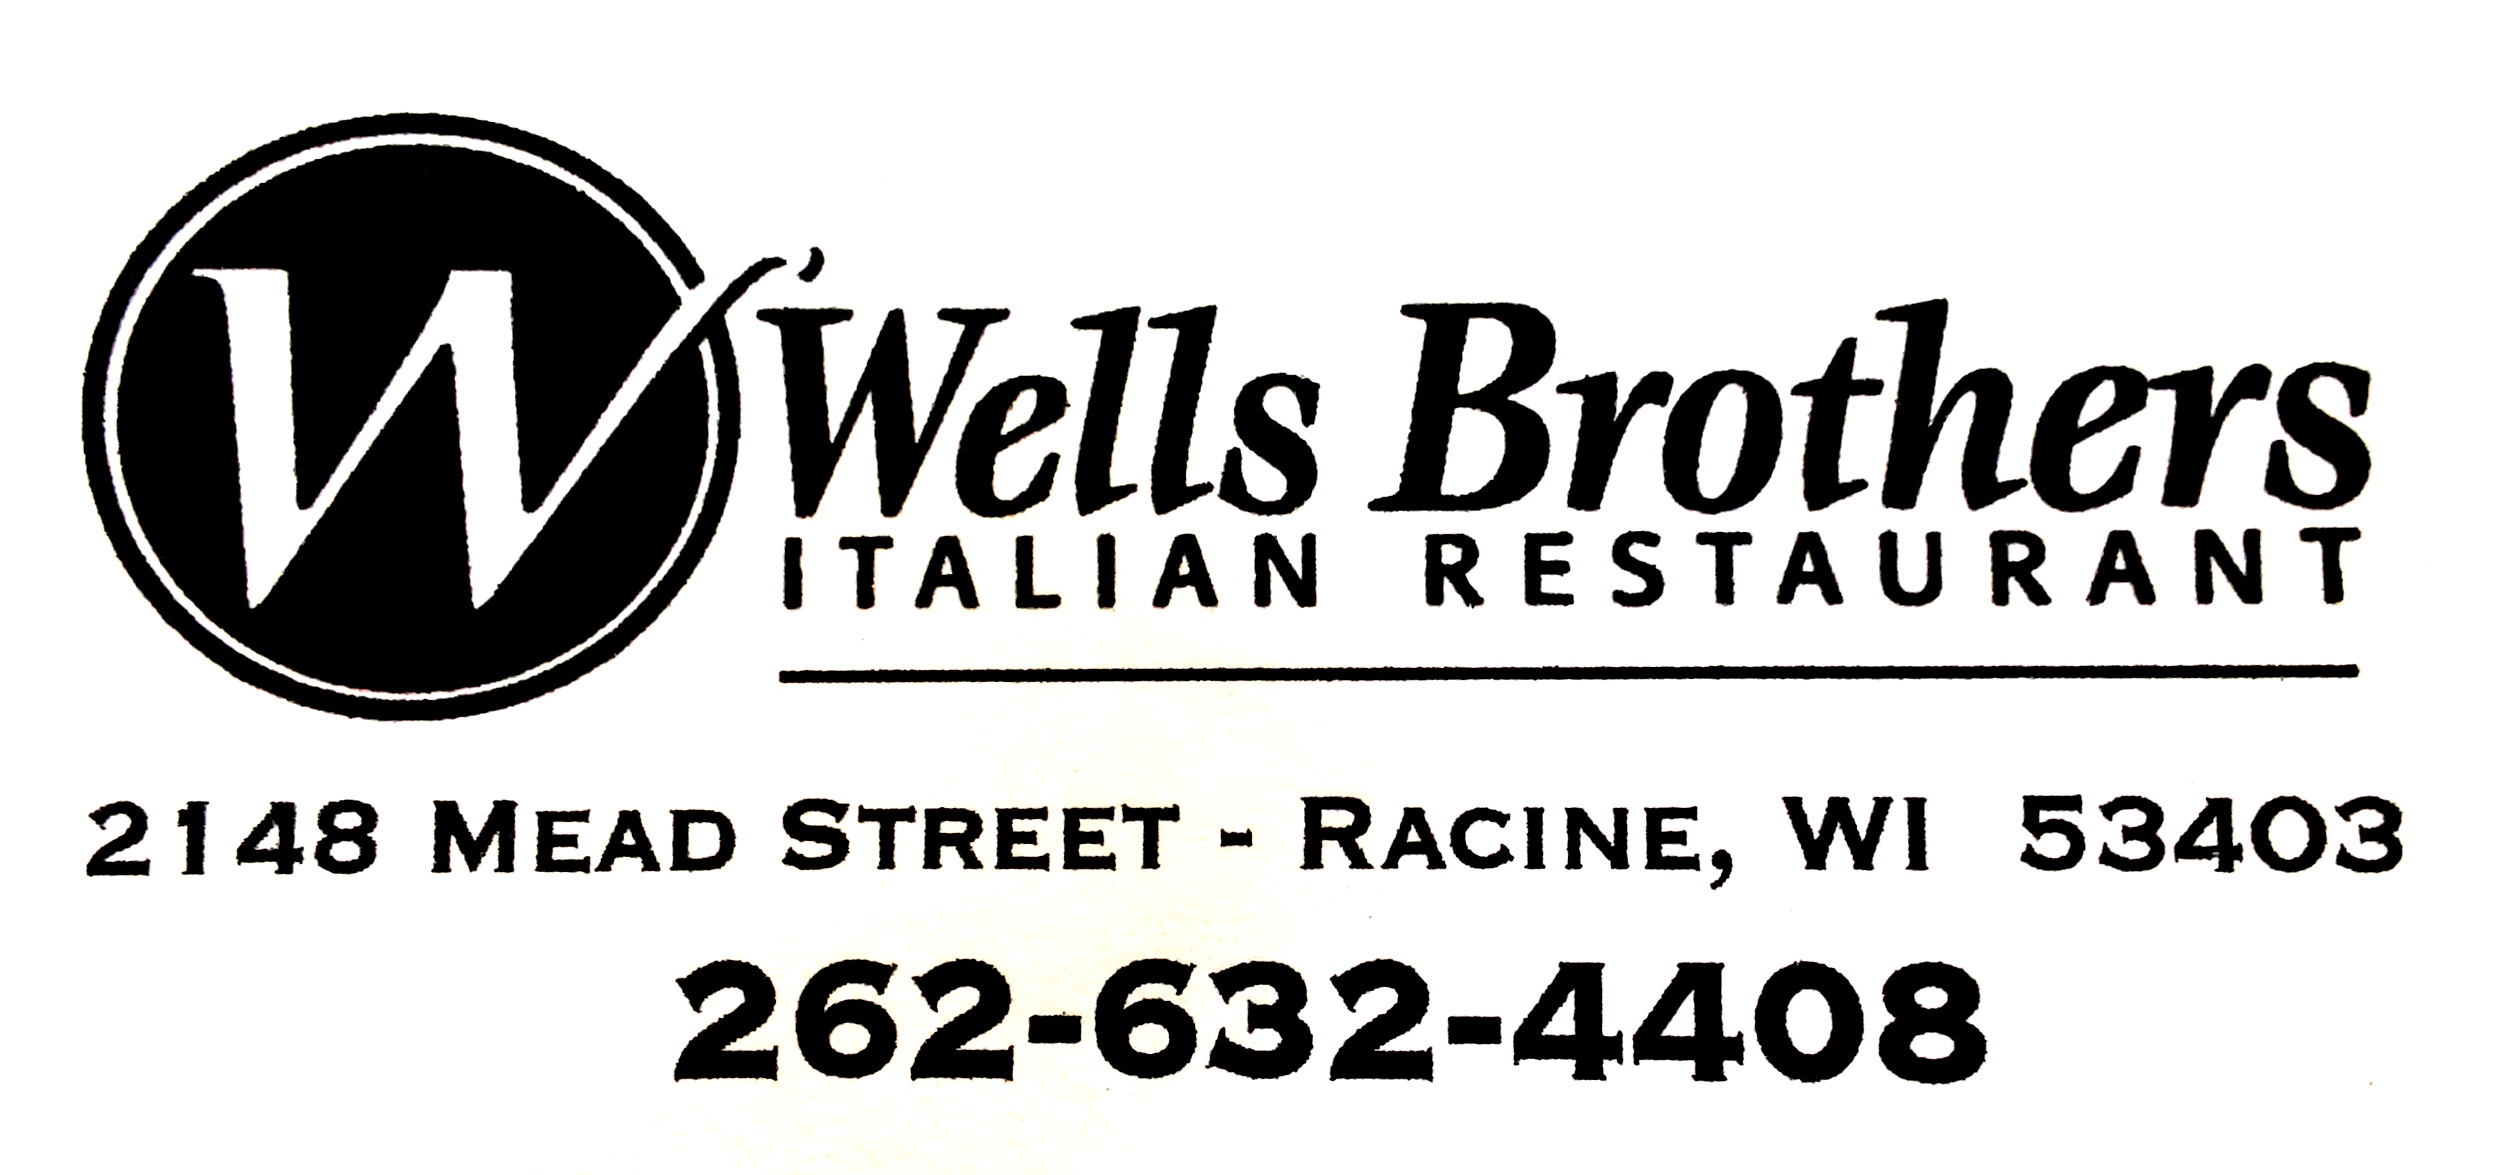 u.11271.Wells Brothers logo.jpg